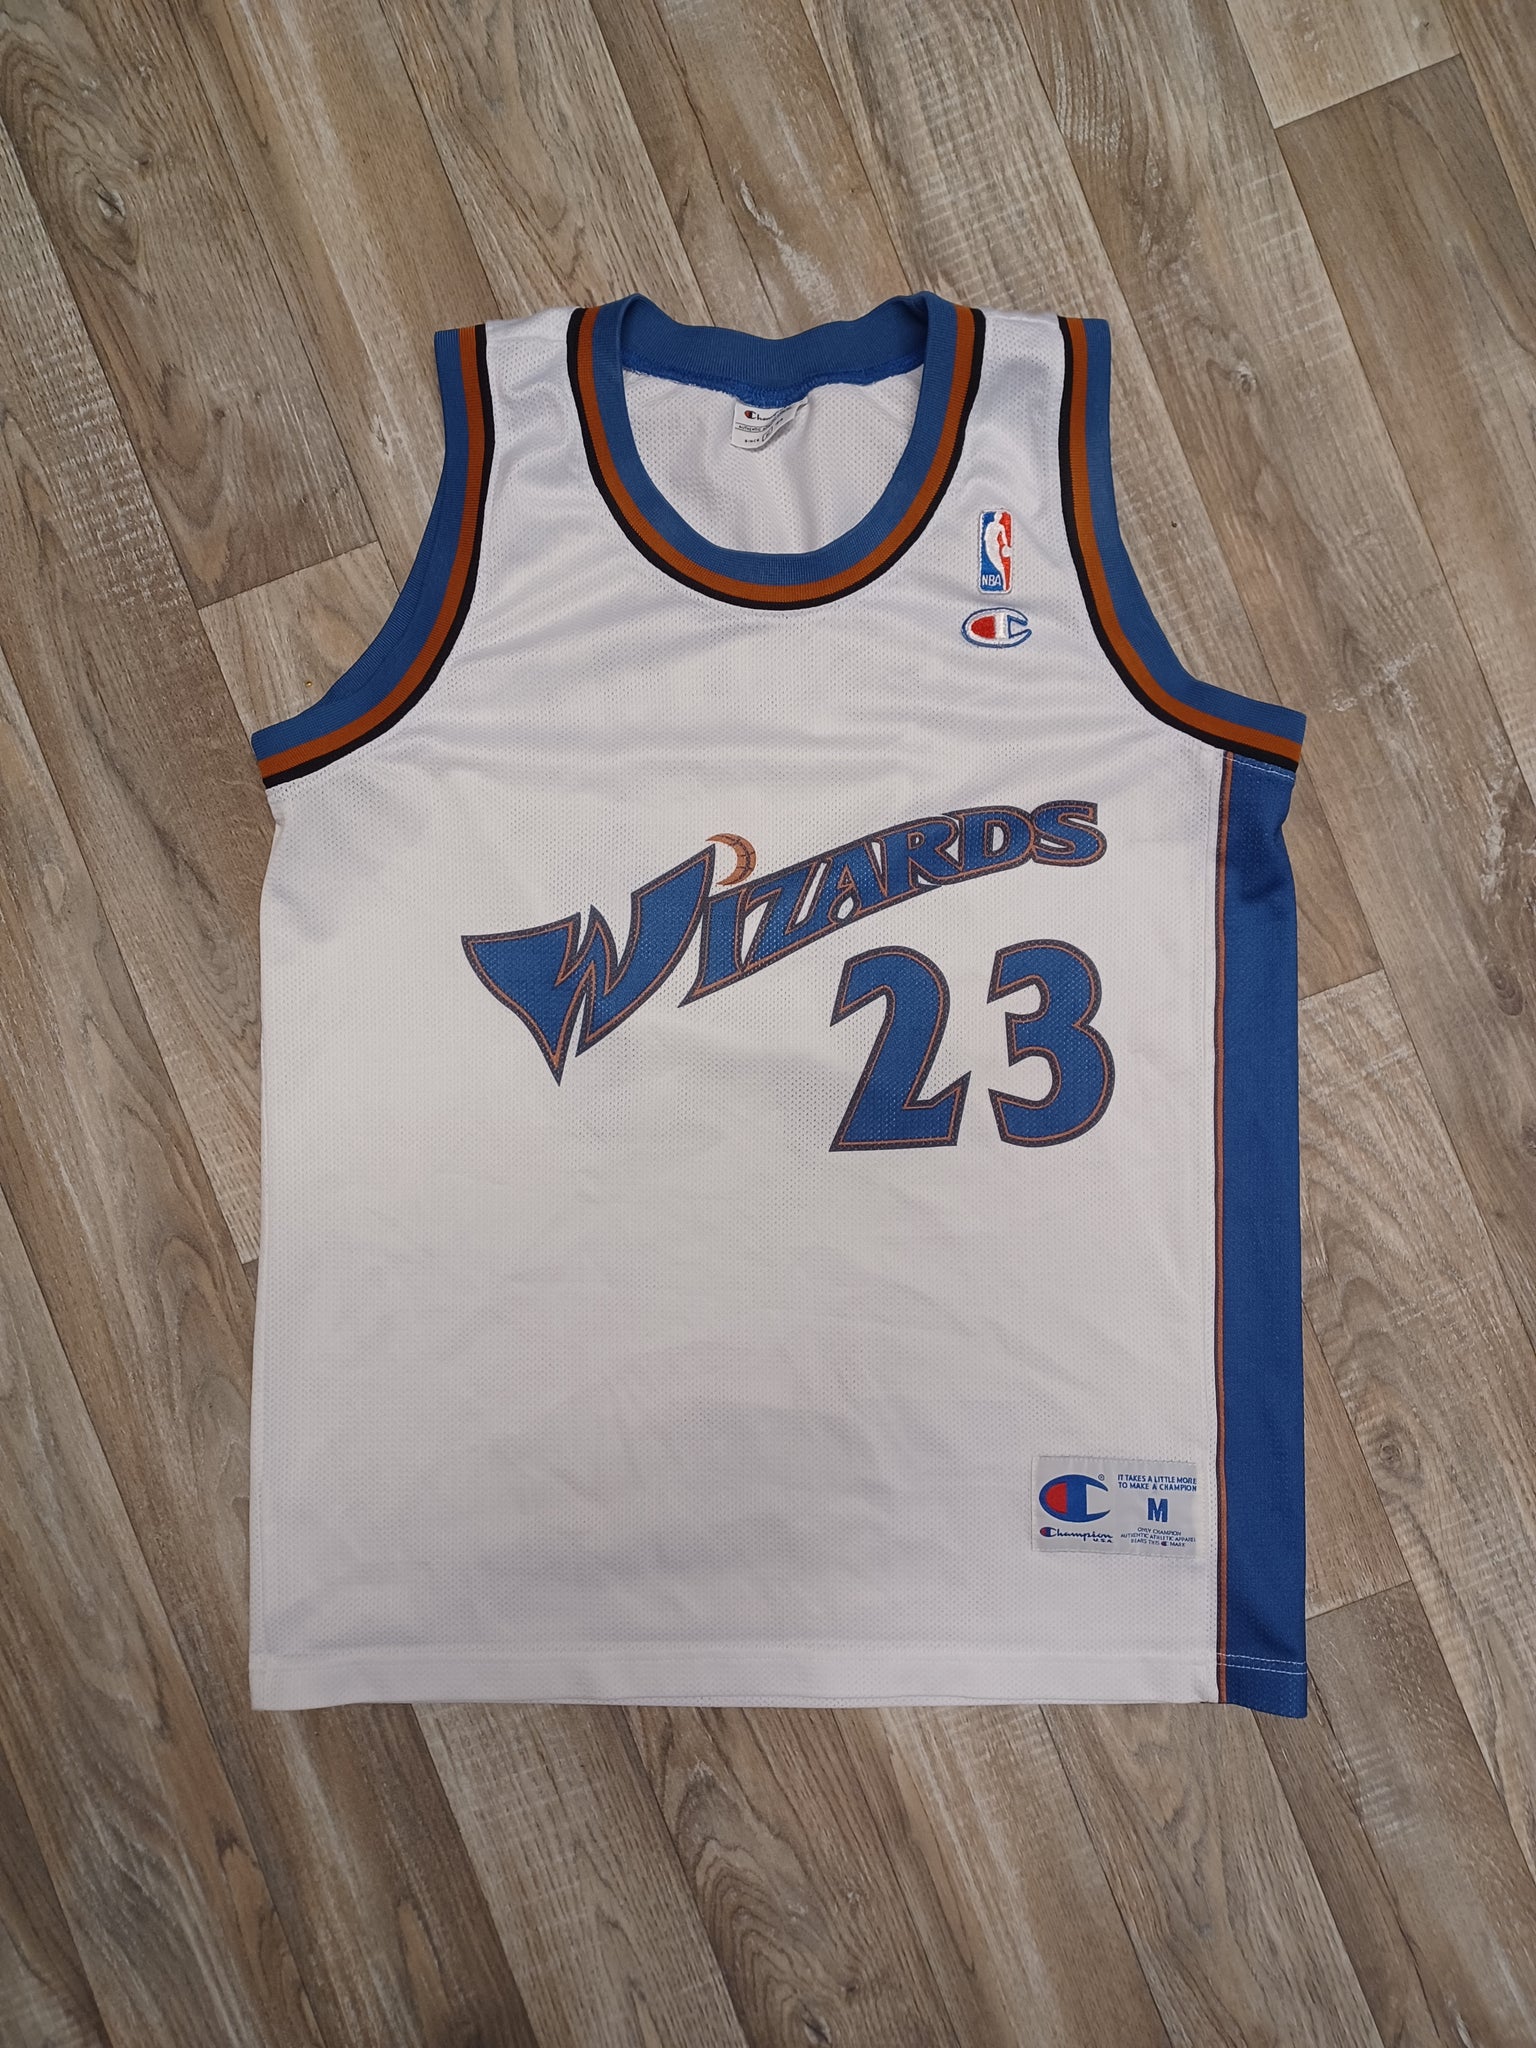 🏀 Michael Jordan Washington Wizards Jersey Size Medium – The